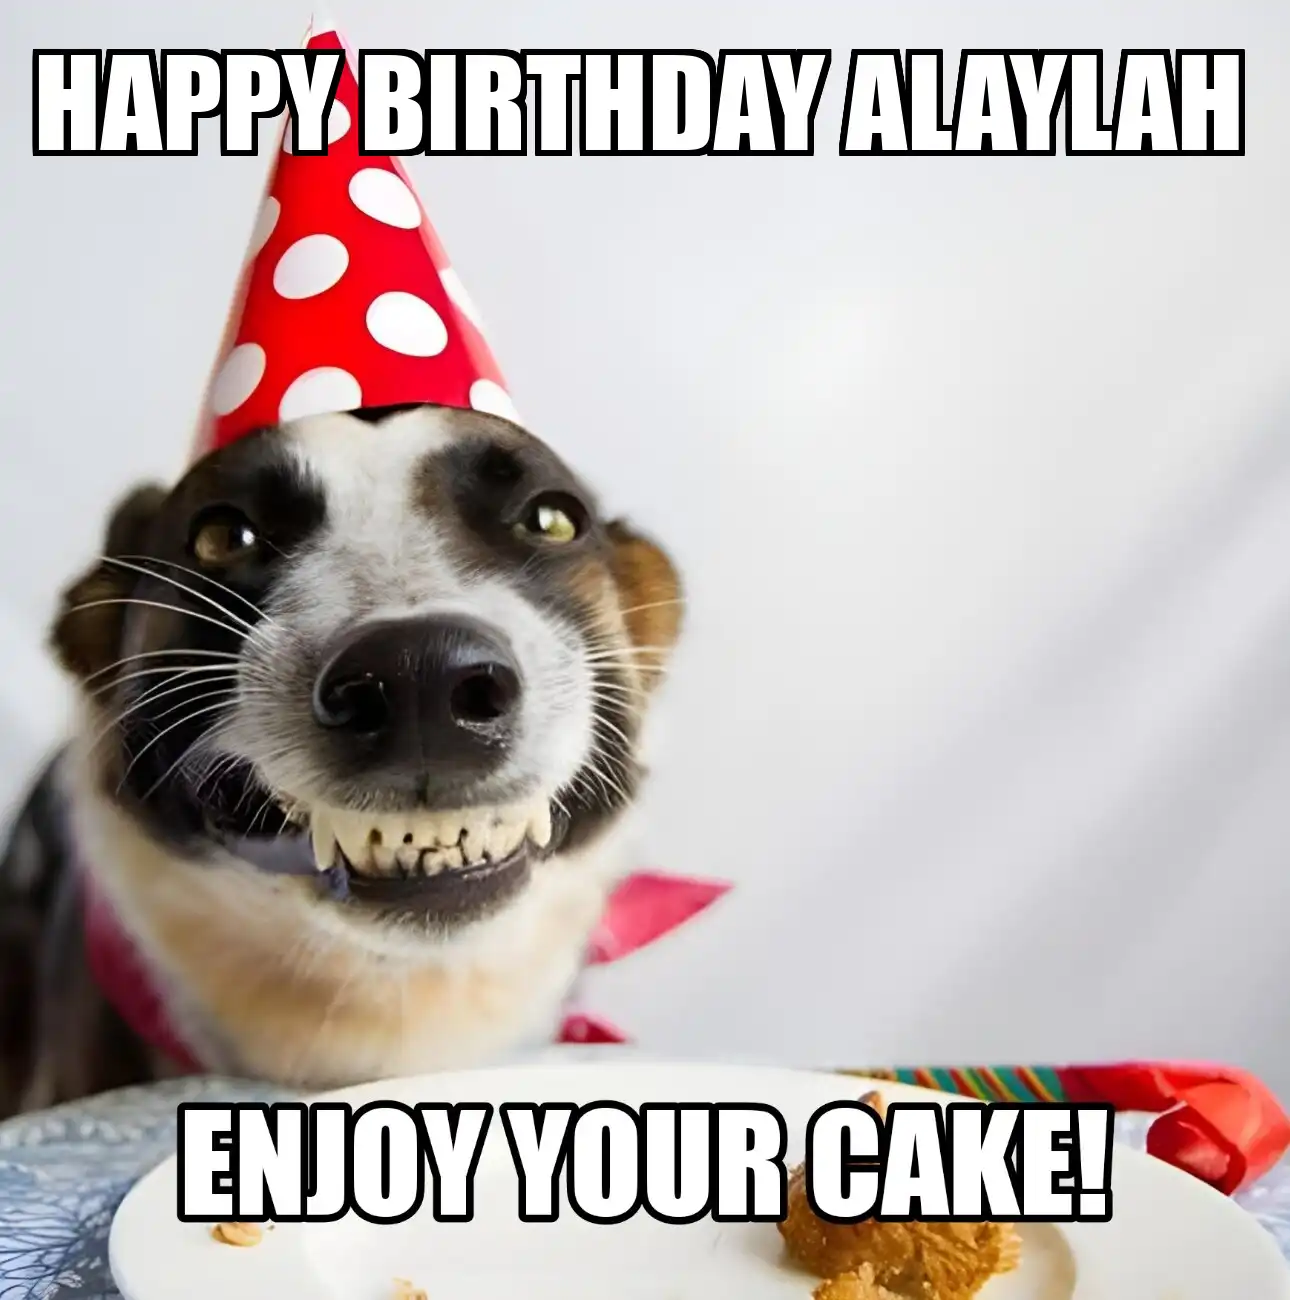 Happy Birthday Alaylah Enjoy Your Cake Dog Meme